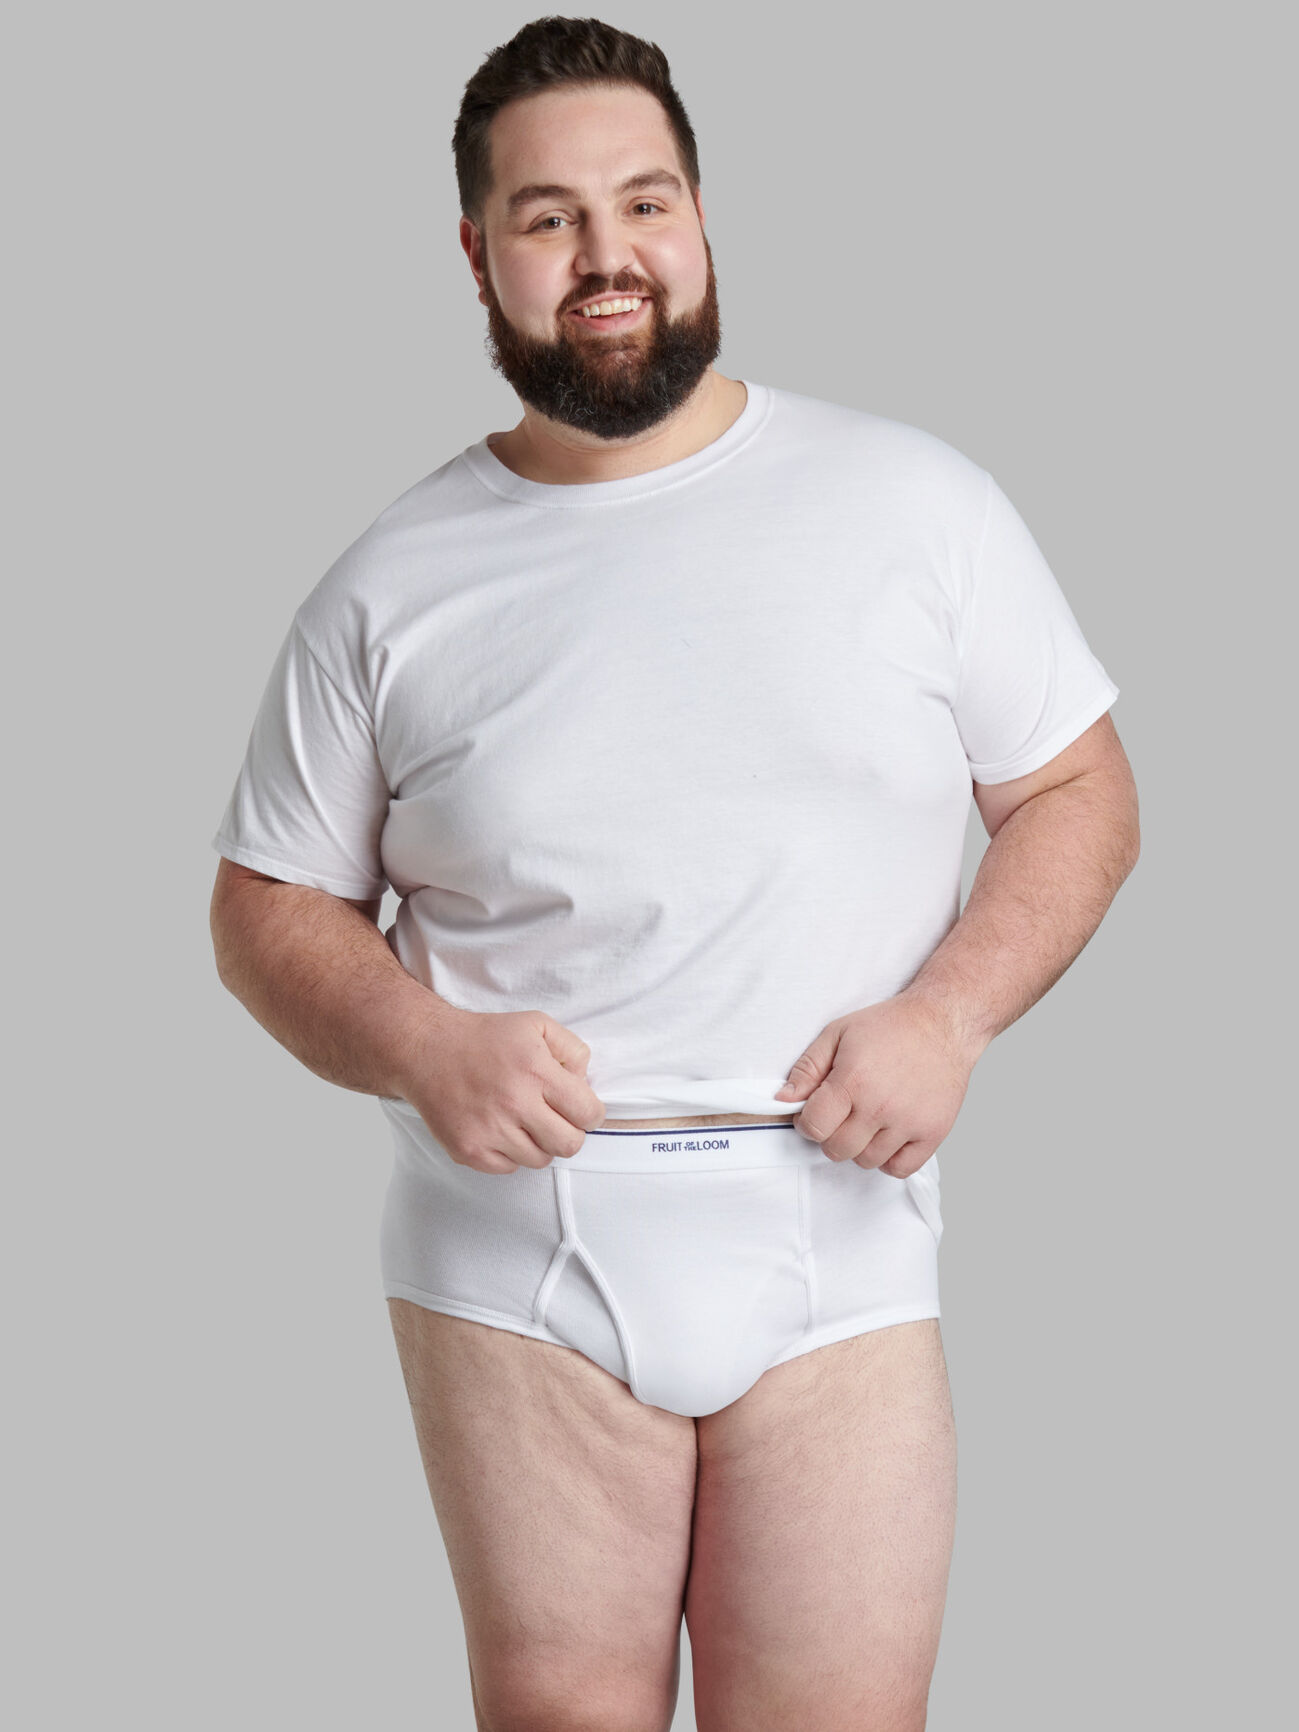 6 Pack White Men Boxers Shorts Underwear Bottom Cotton Modal